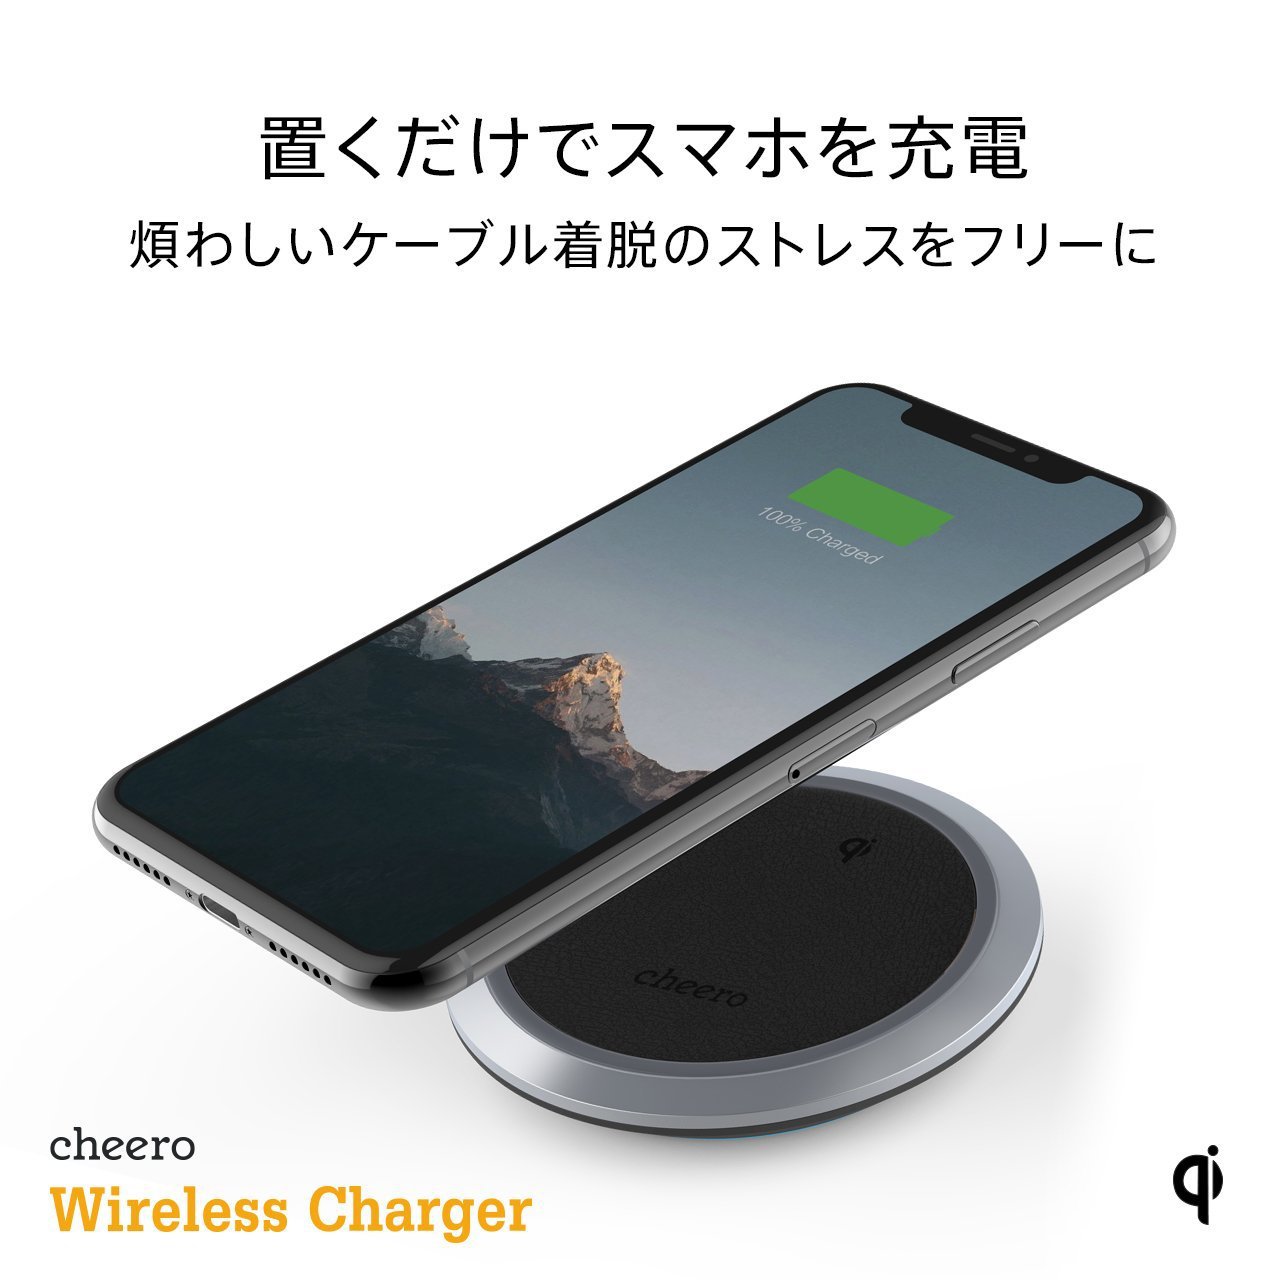 cheero Wireless Charger